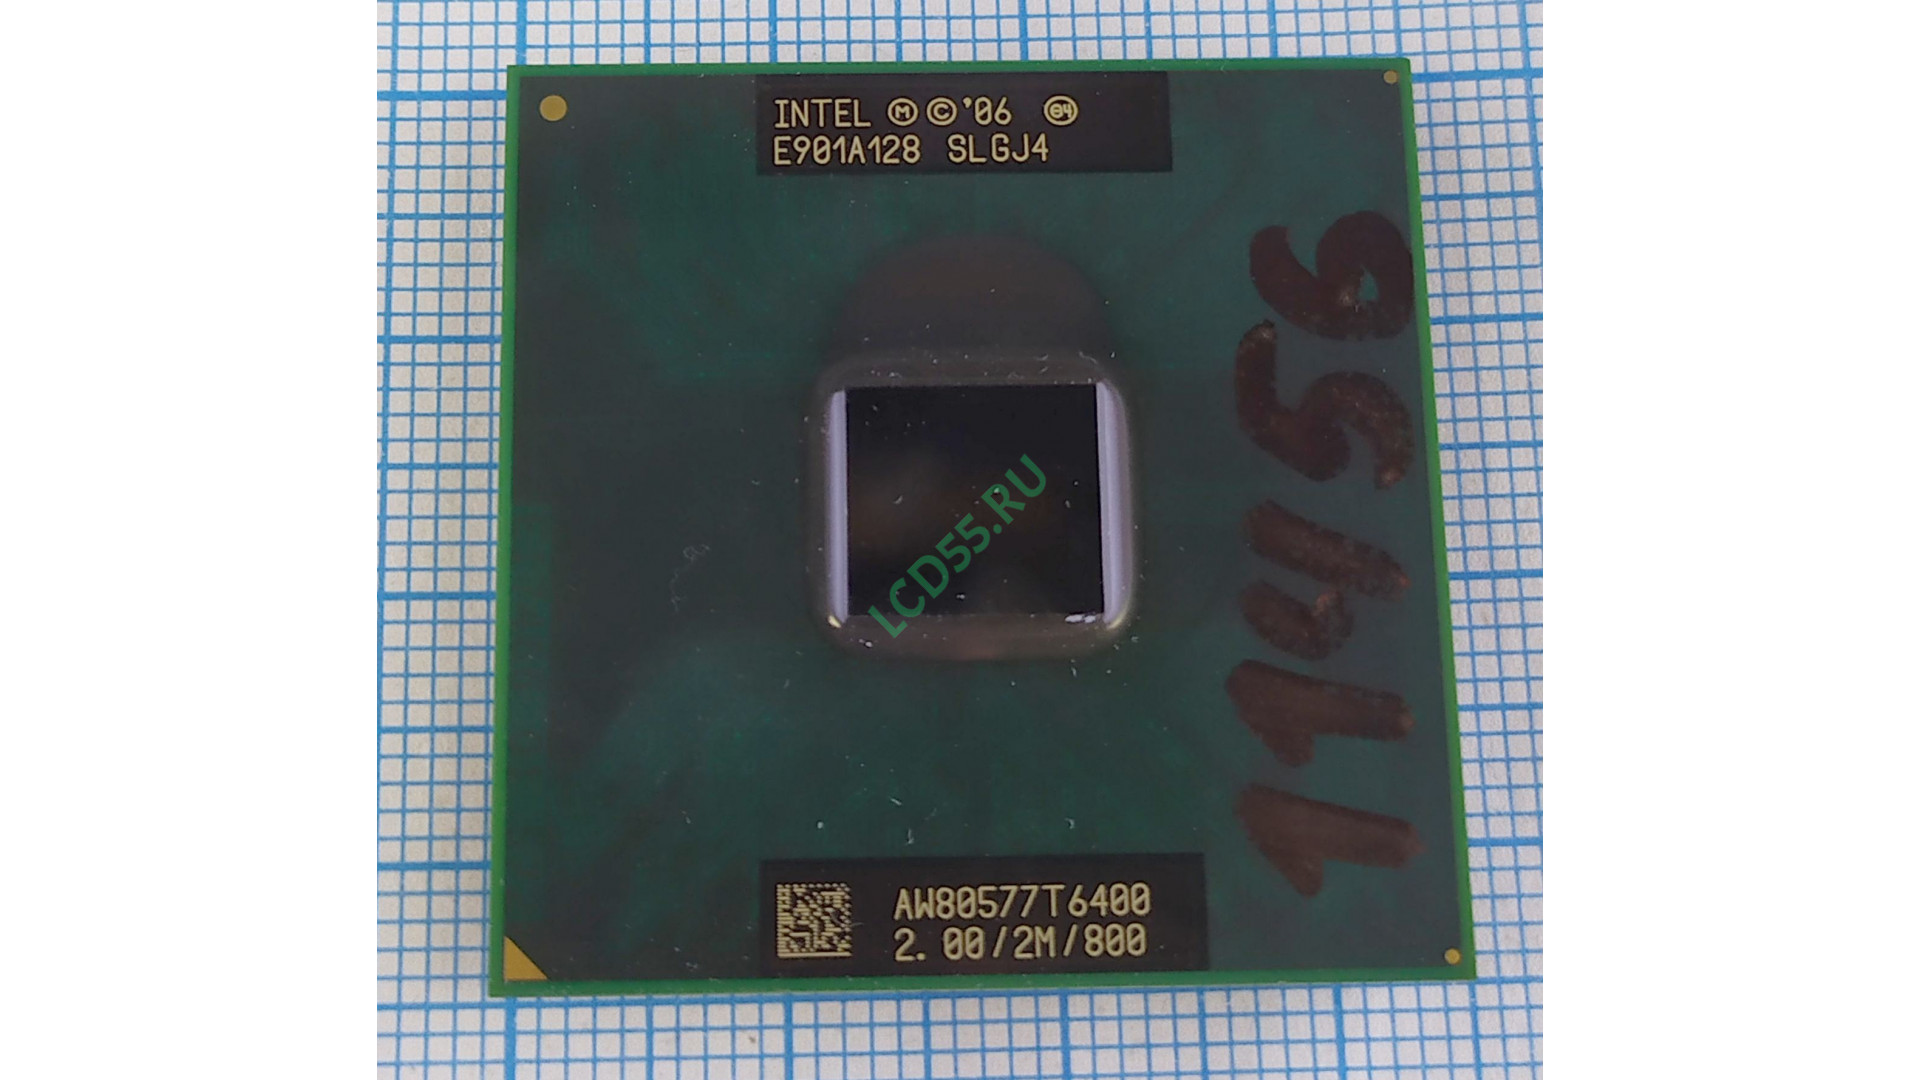 Intel Core 2 Duo Mobile T6400 SLGJ4 2.00 GHz